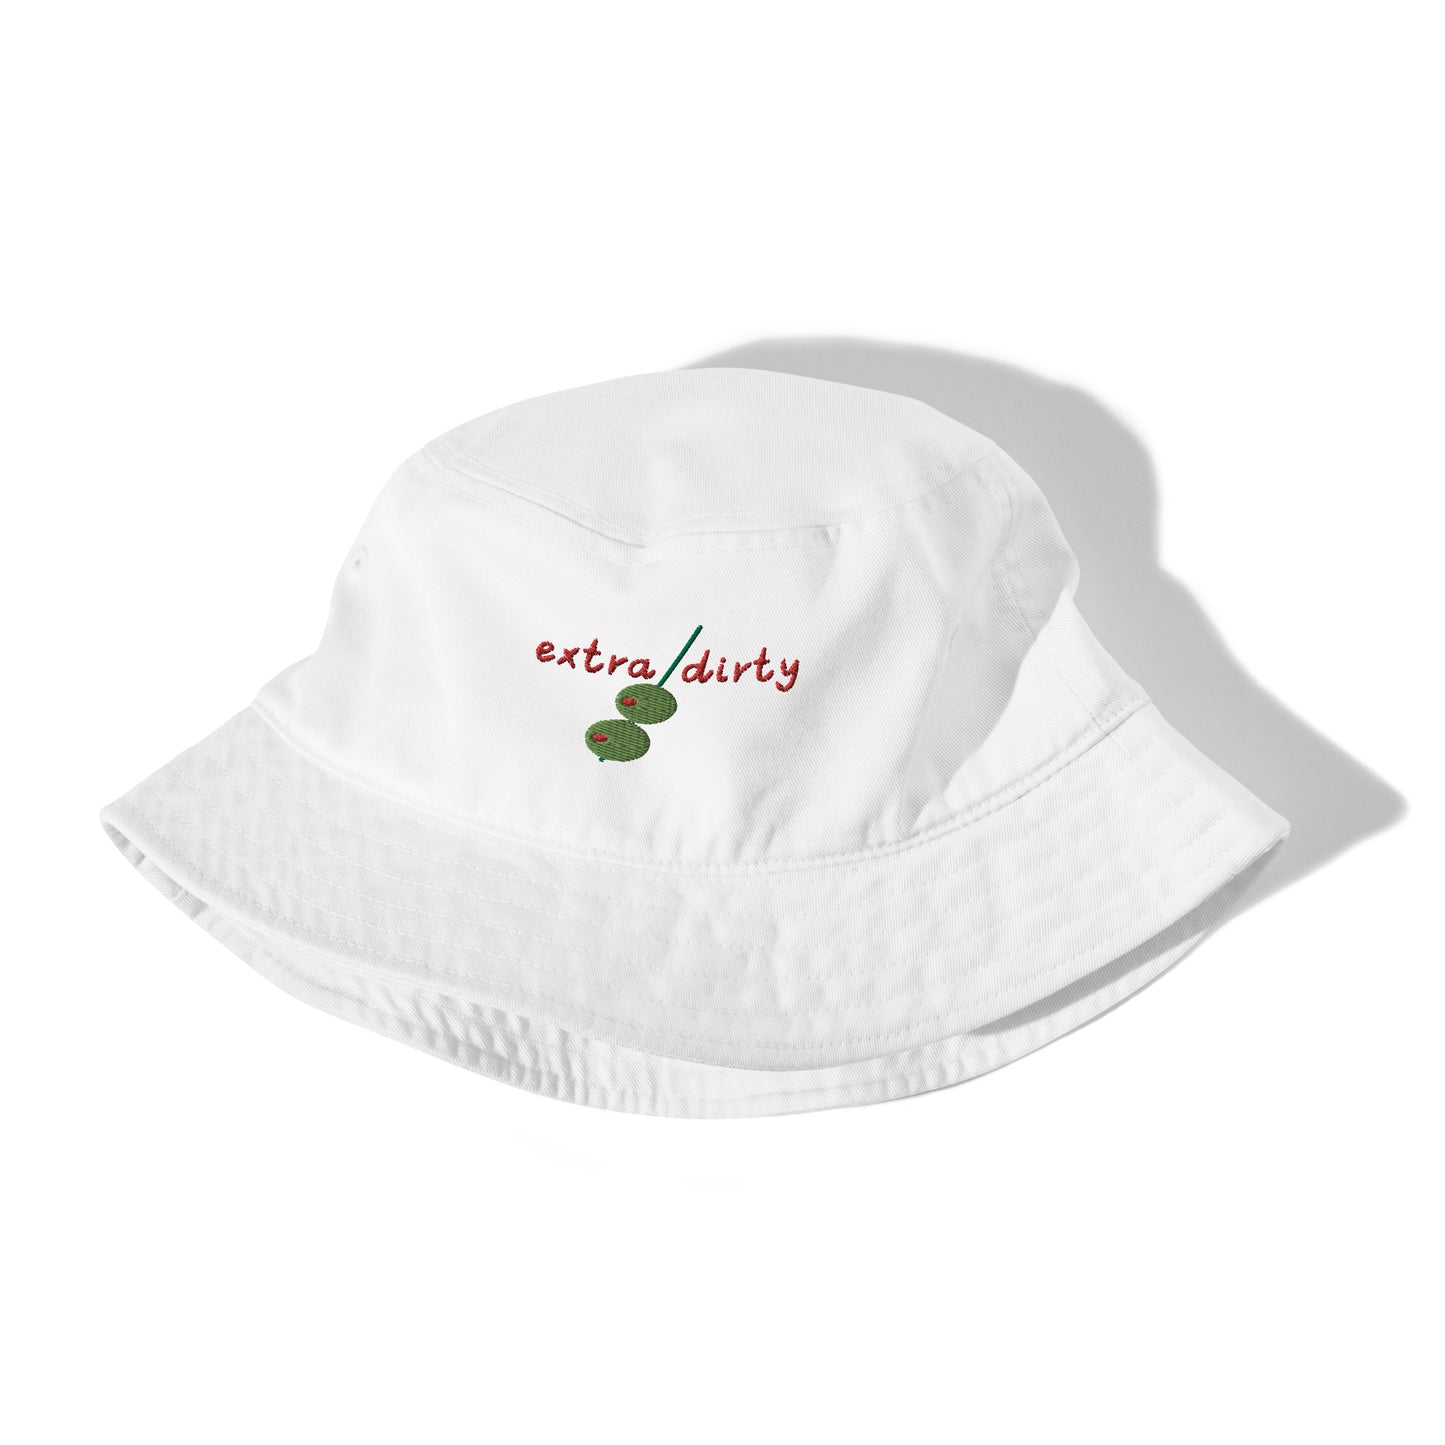 "Extra Dirty" Organic Bucket Hat